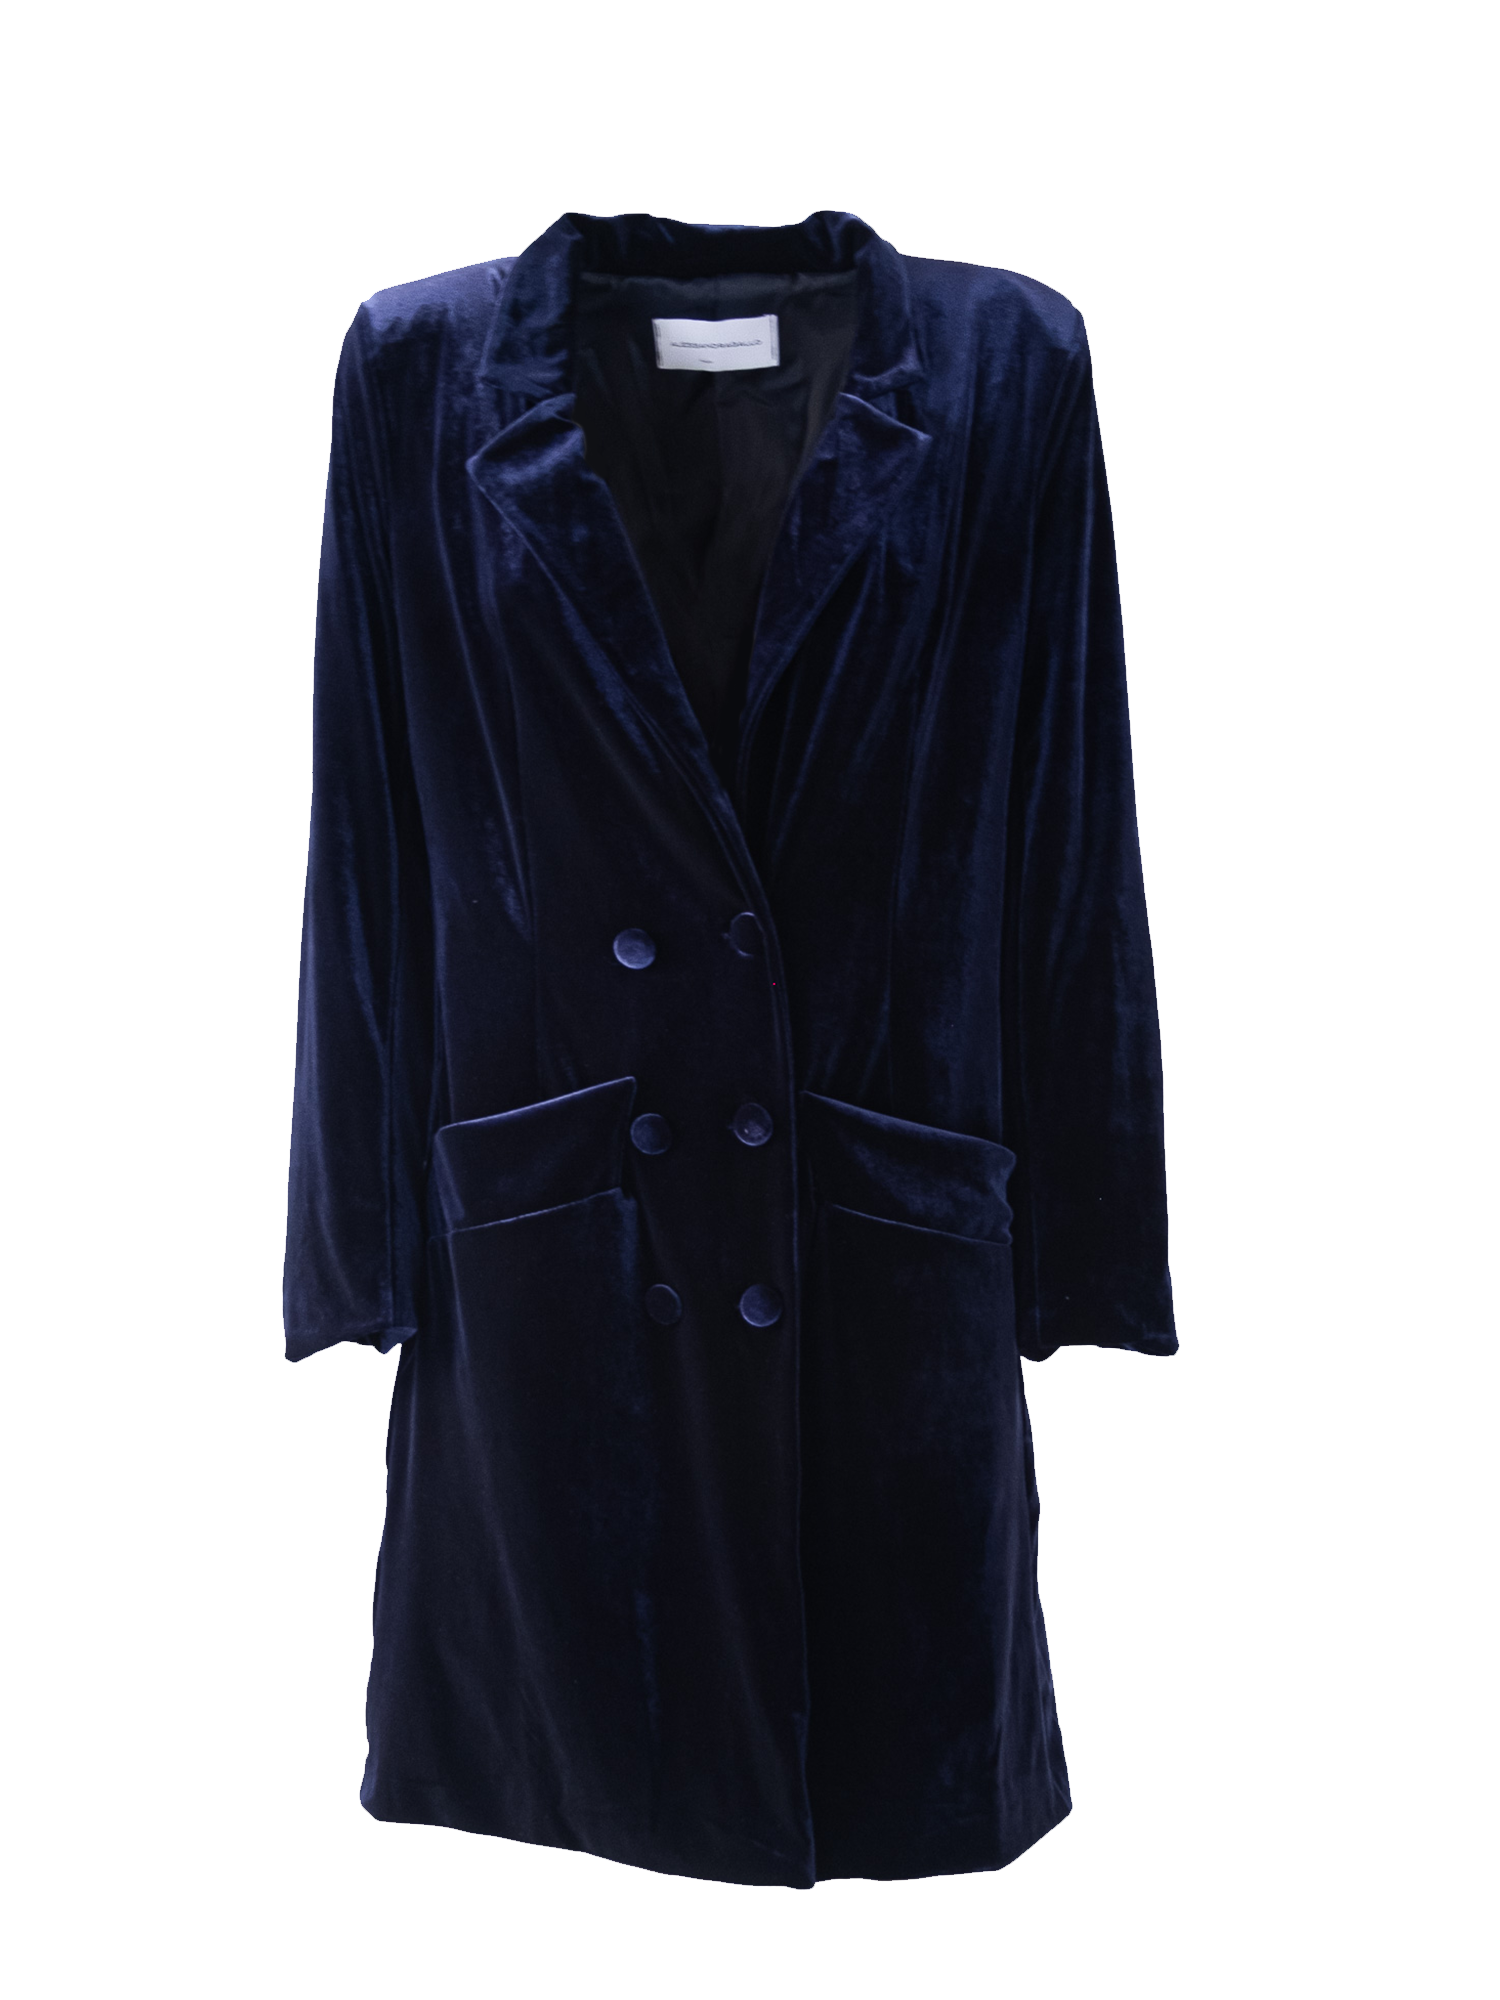 NORA - dress robe coat in blue chenille